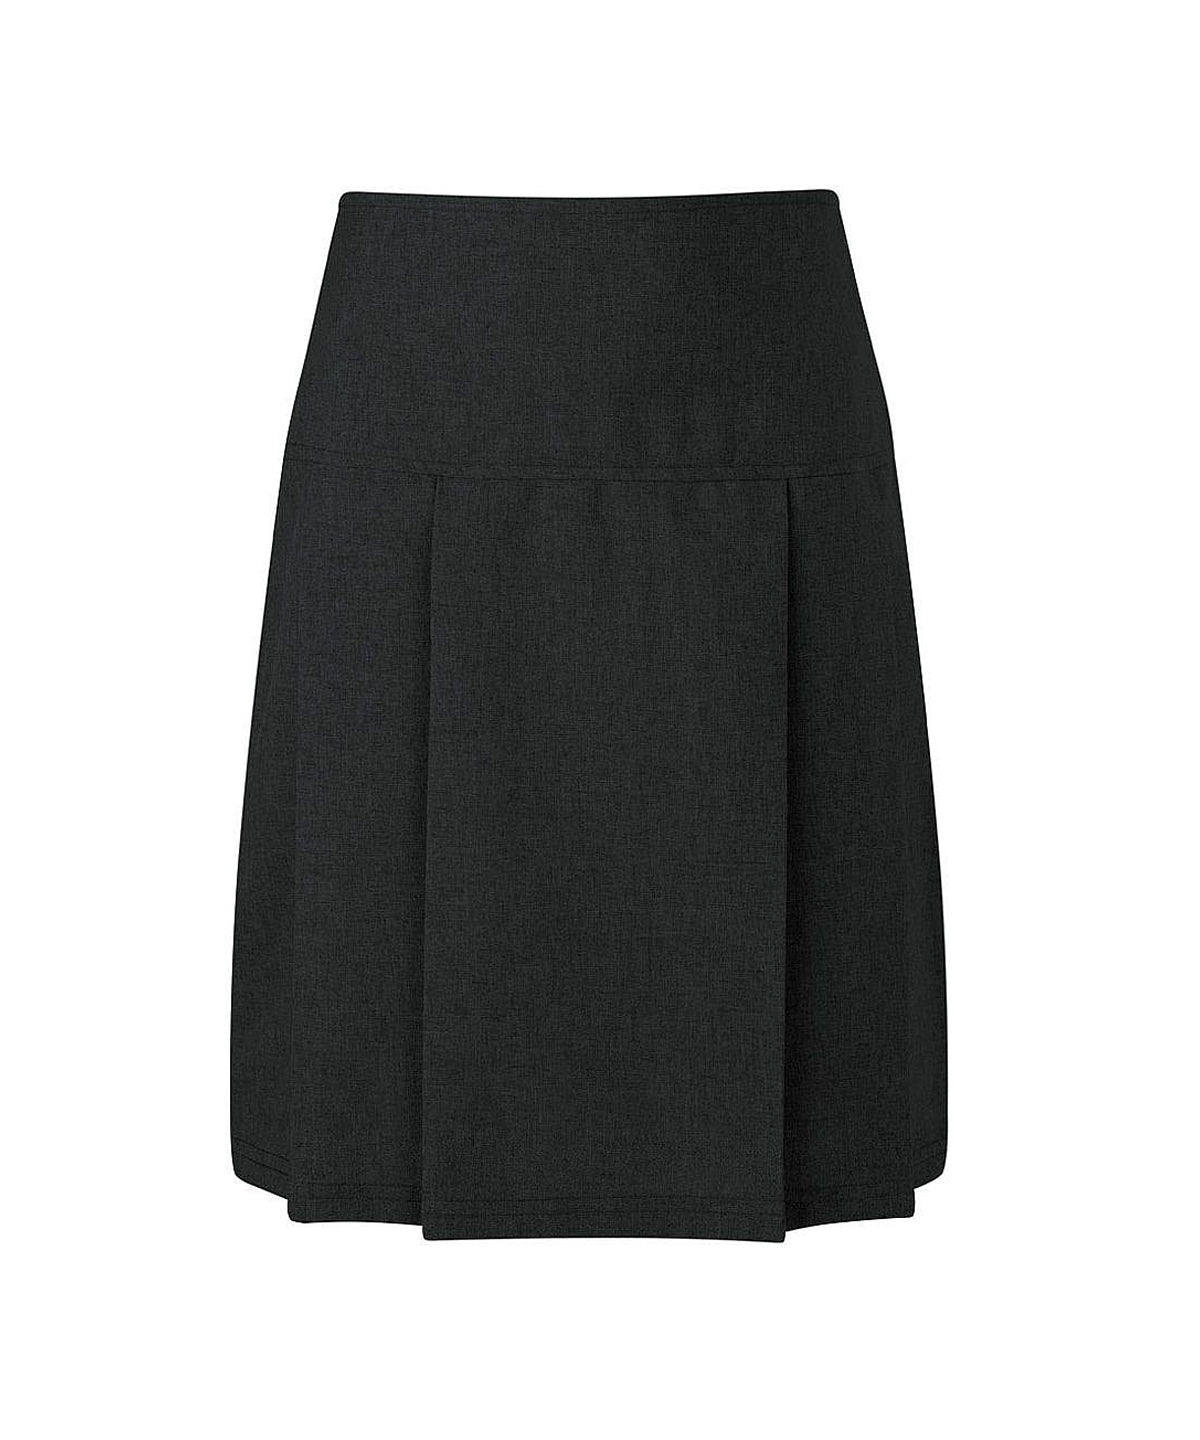 Banbury Pleated Skirt - Black